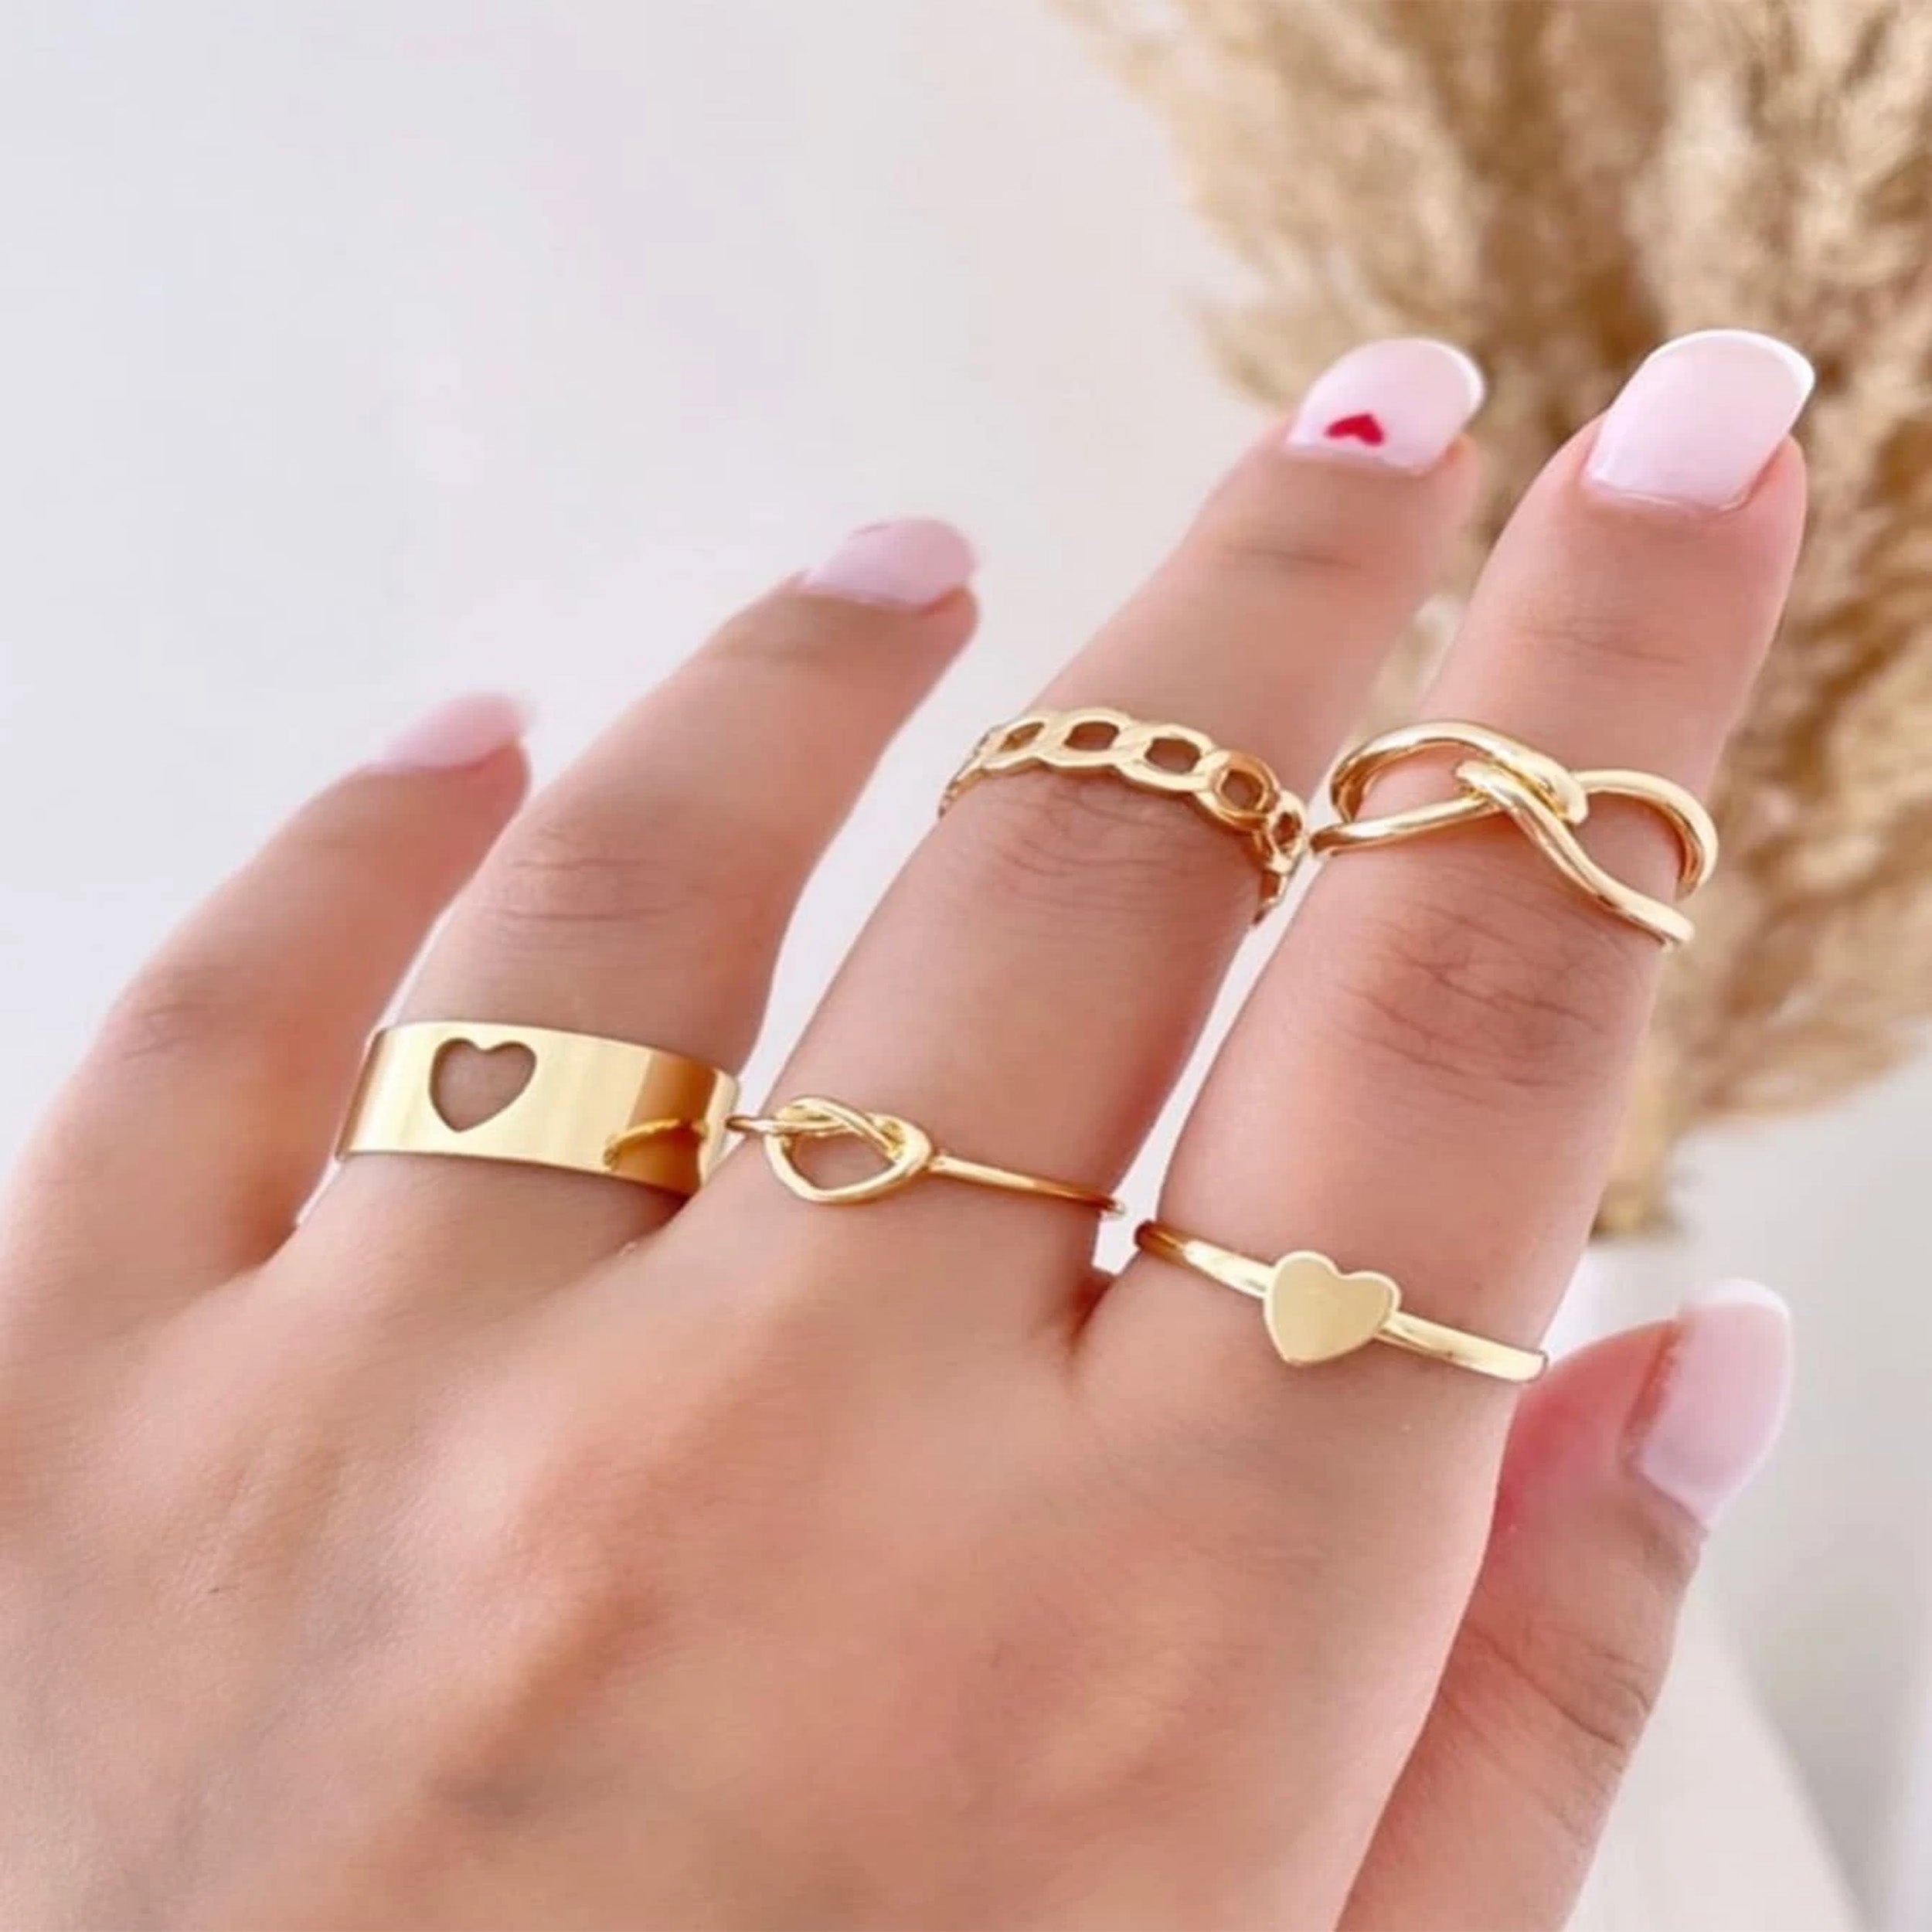 Hug Ring Adjustable Stylish Couple Fancy Love Rings |Boys & Girls Valentine  Gift Metal Ring